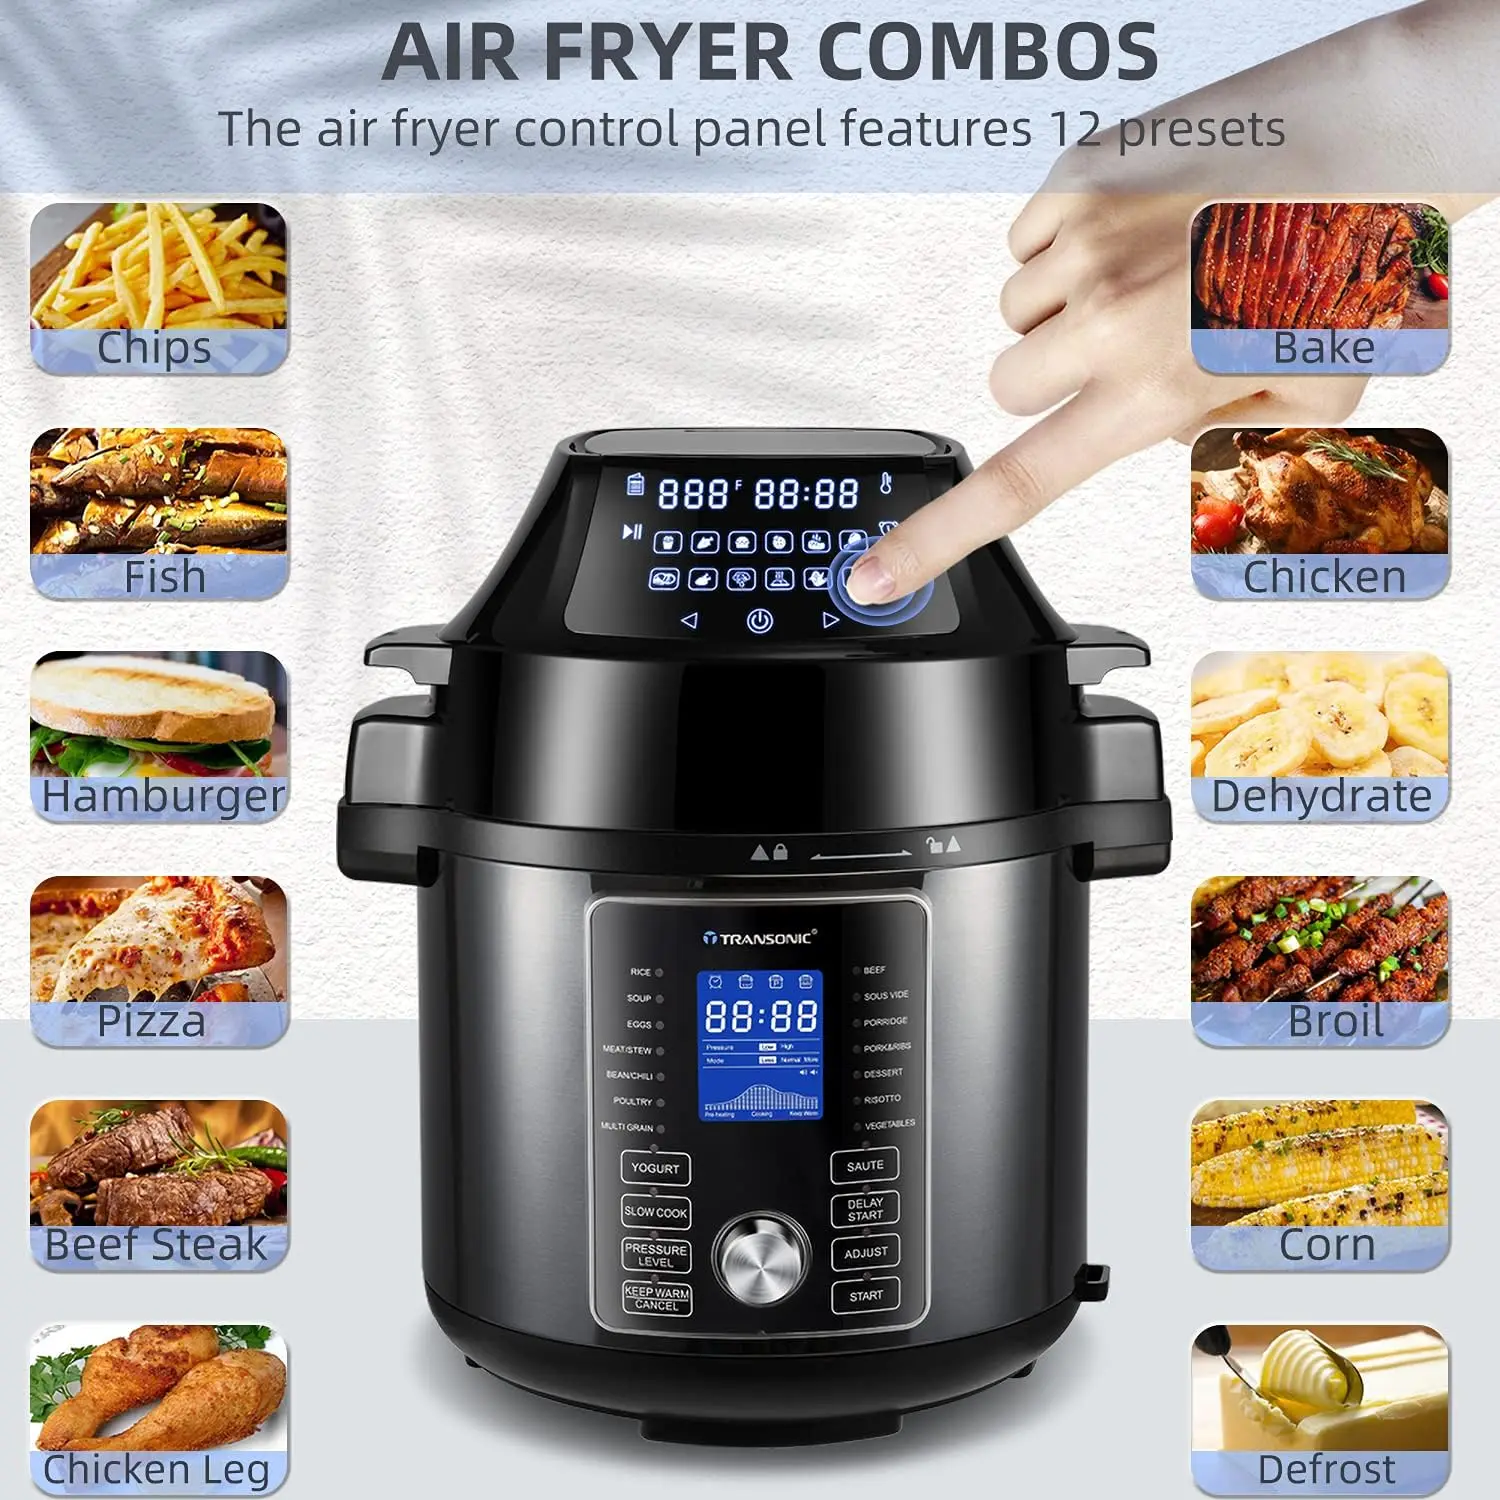 OPA160 Pressure Cooker Air Fryer Combo, 6 Quart 1500W Multi Cooker , All in  1 Pressure Cooker with Air Fryer Lid, Large LED Disp - AliExpress